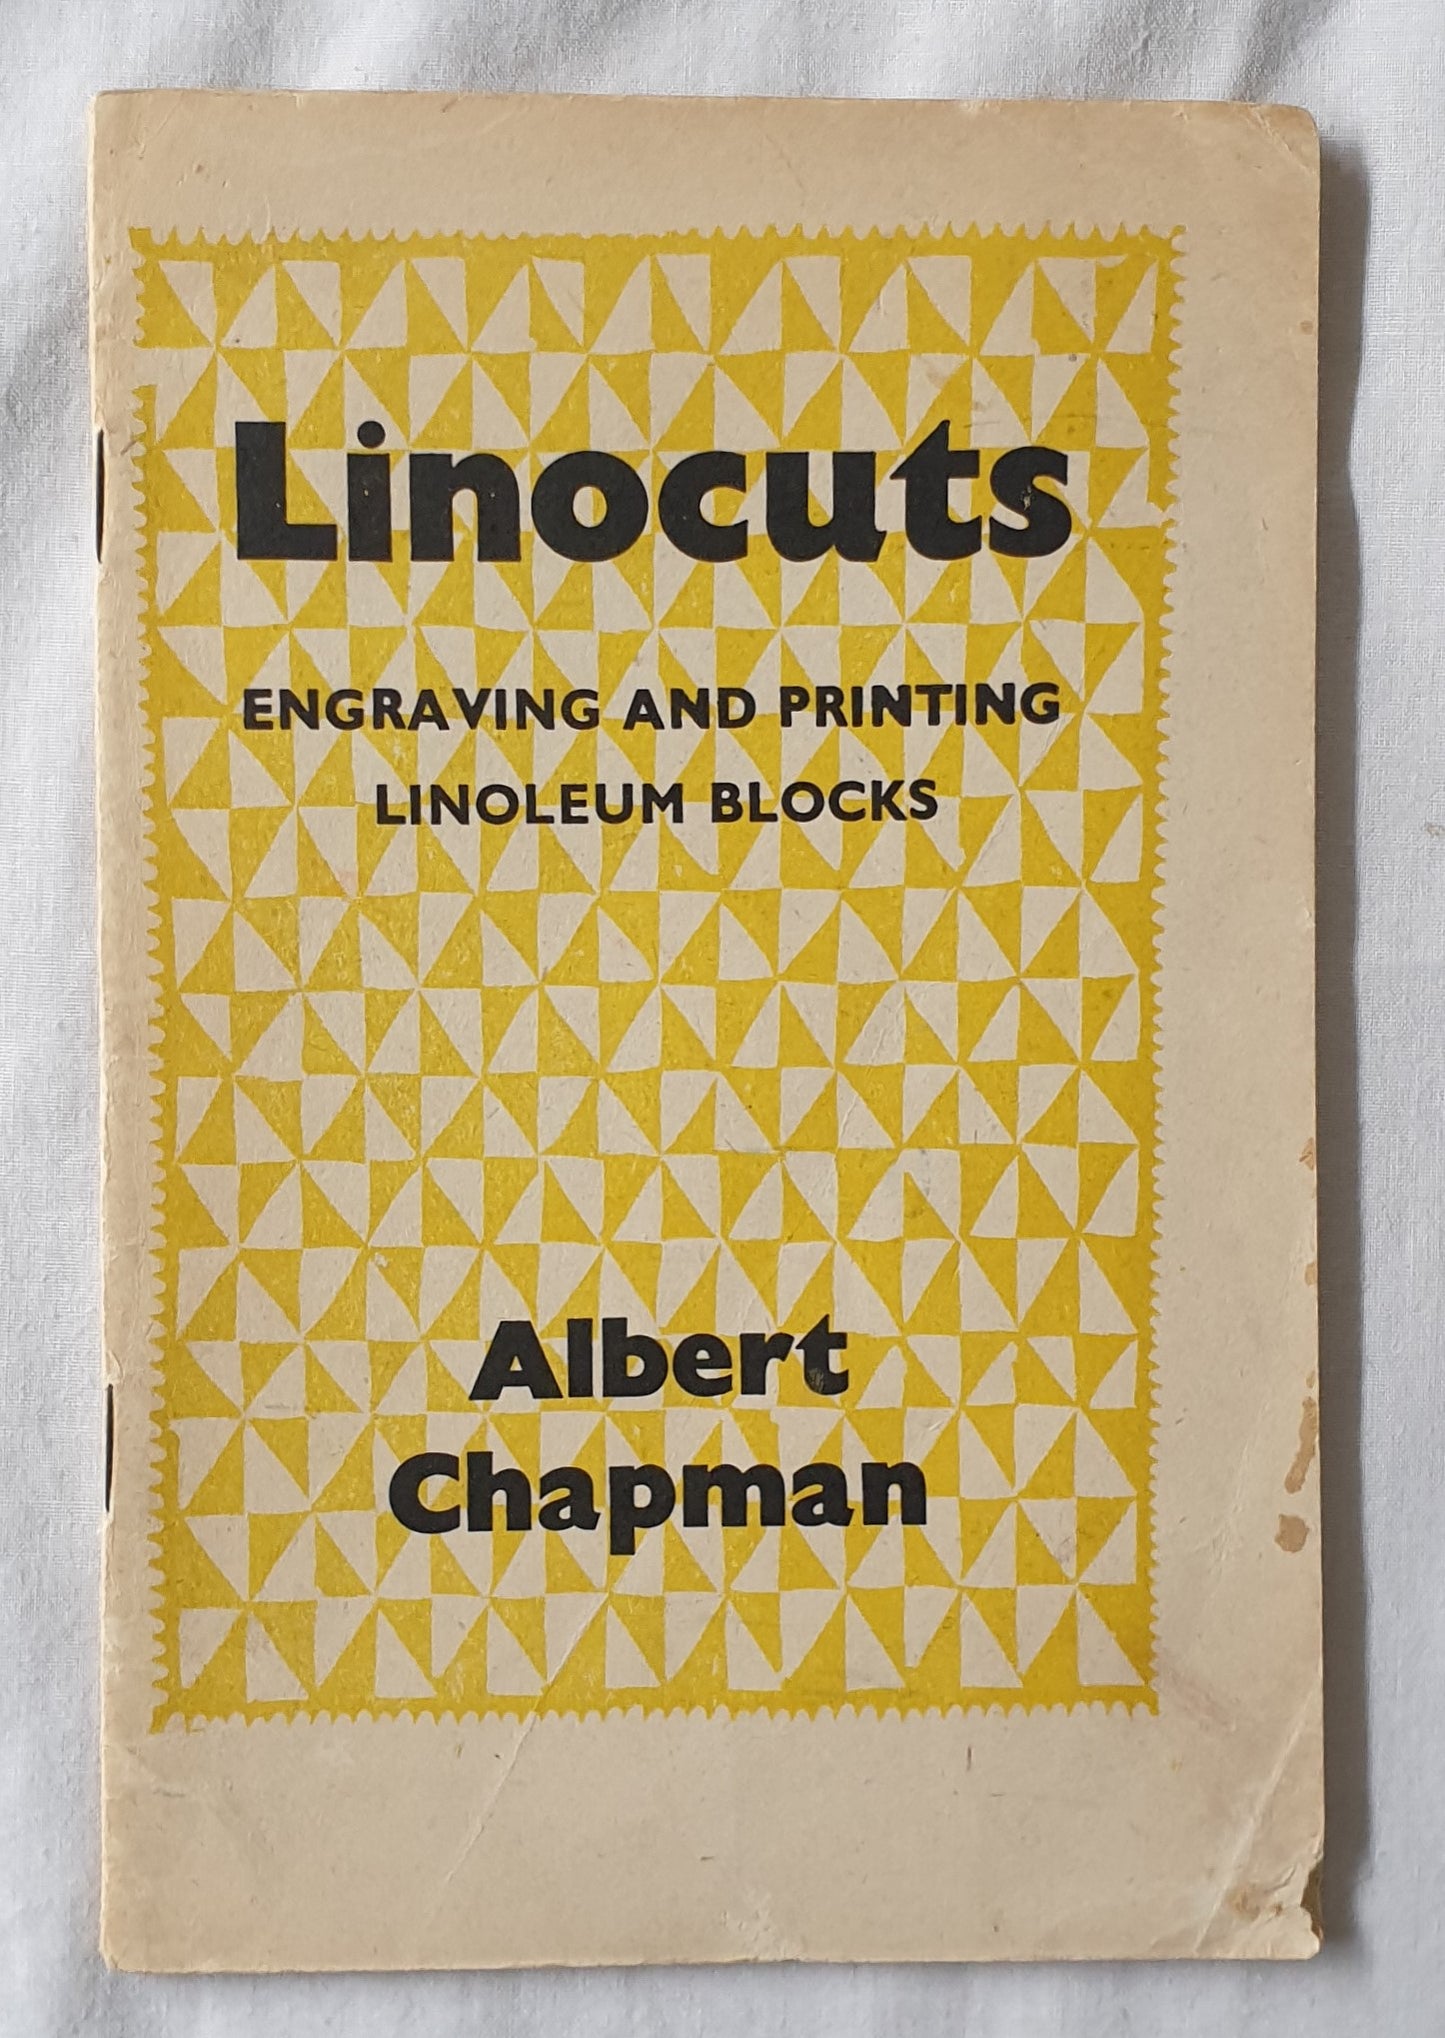 Linocuts by Albert Chapman